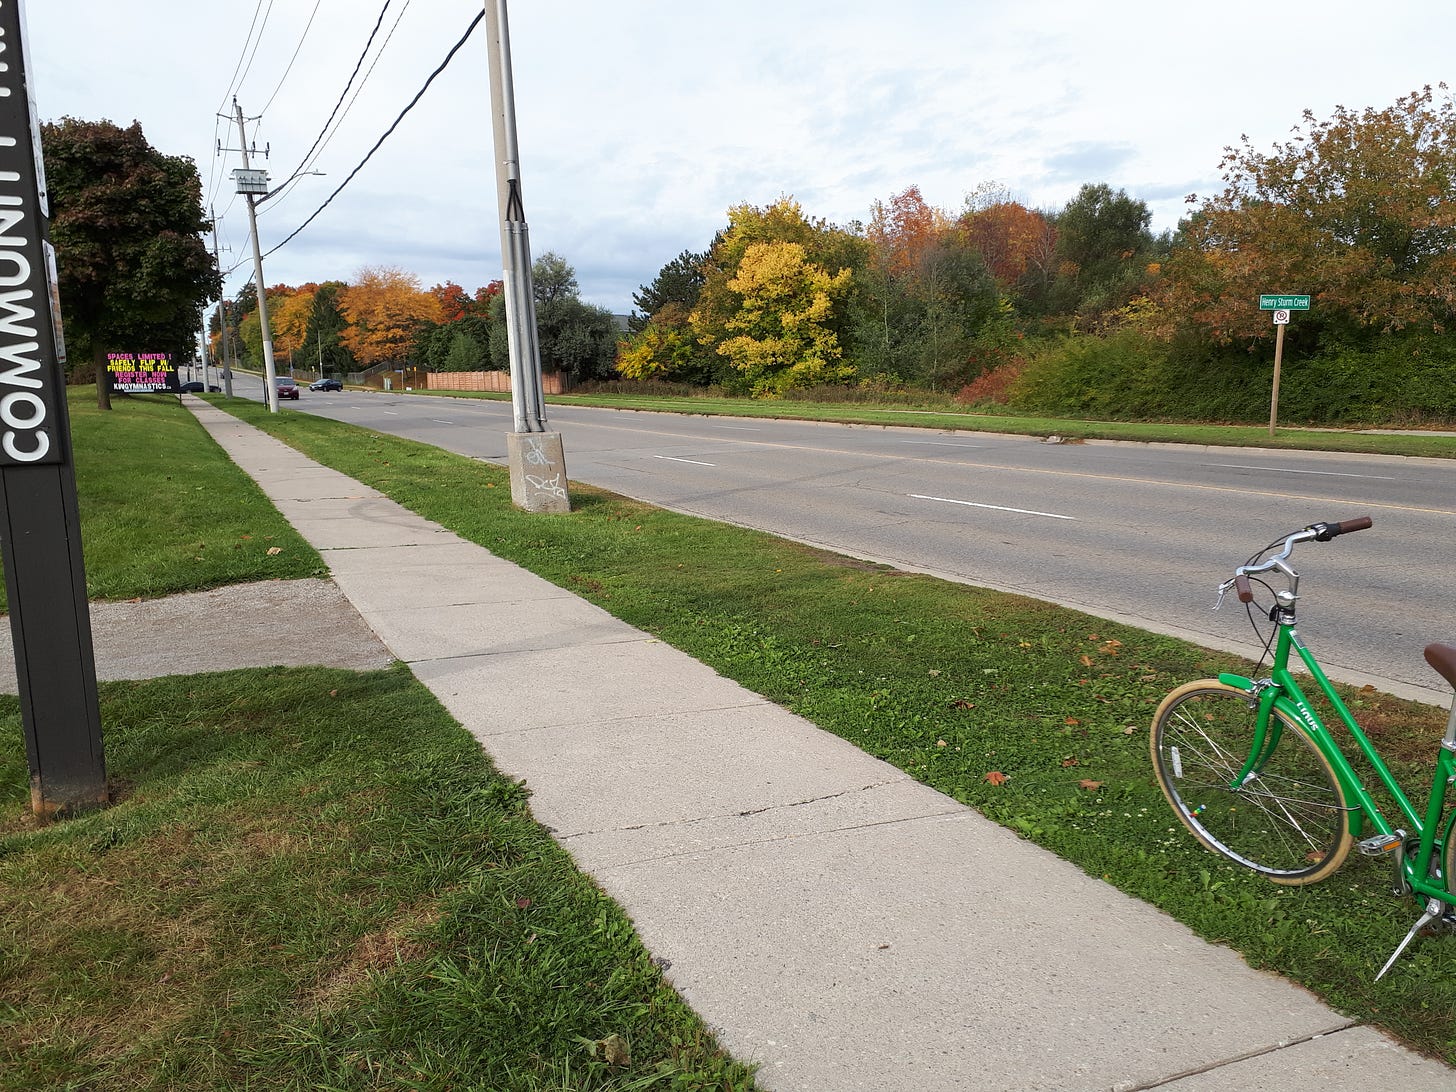 Sidewalk leading to a community trail. Green bike sitting beside the sidewalk.